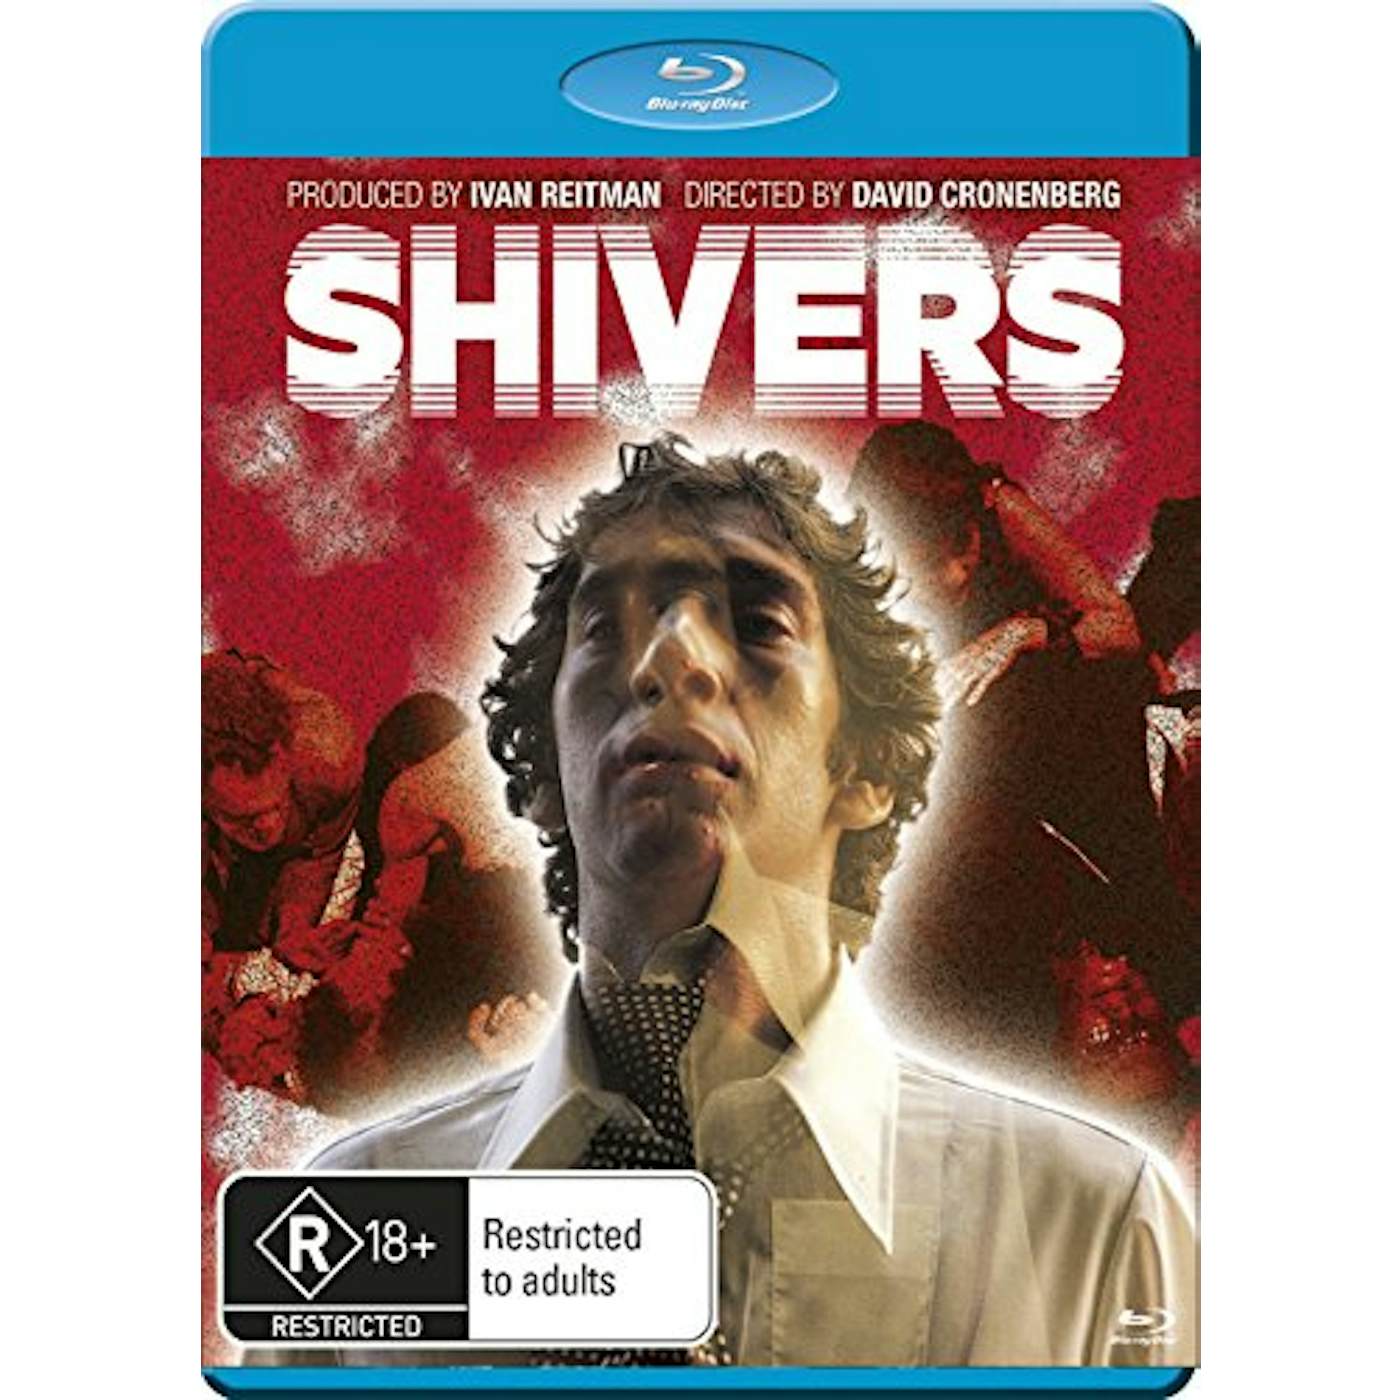 SHIVERS Blu-ray